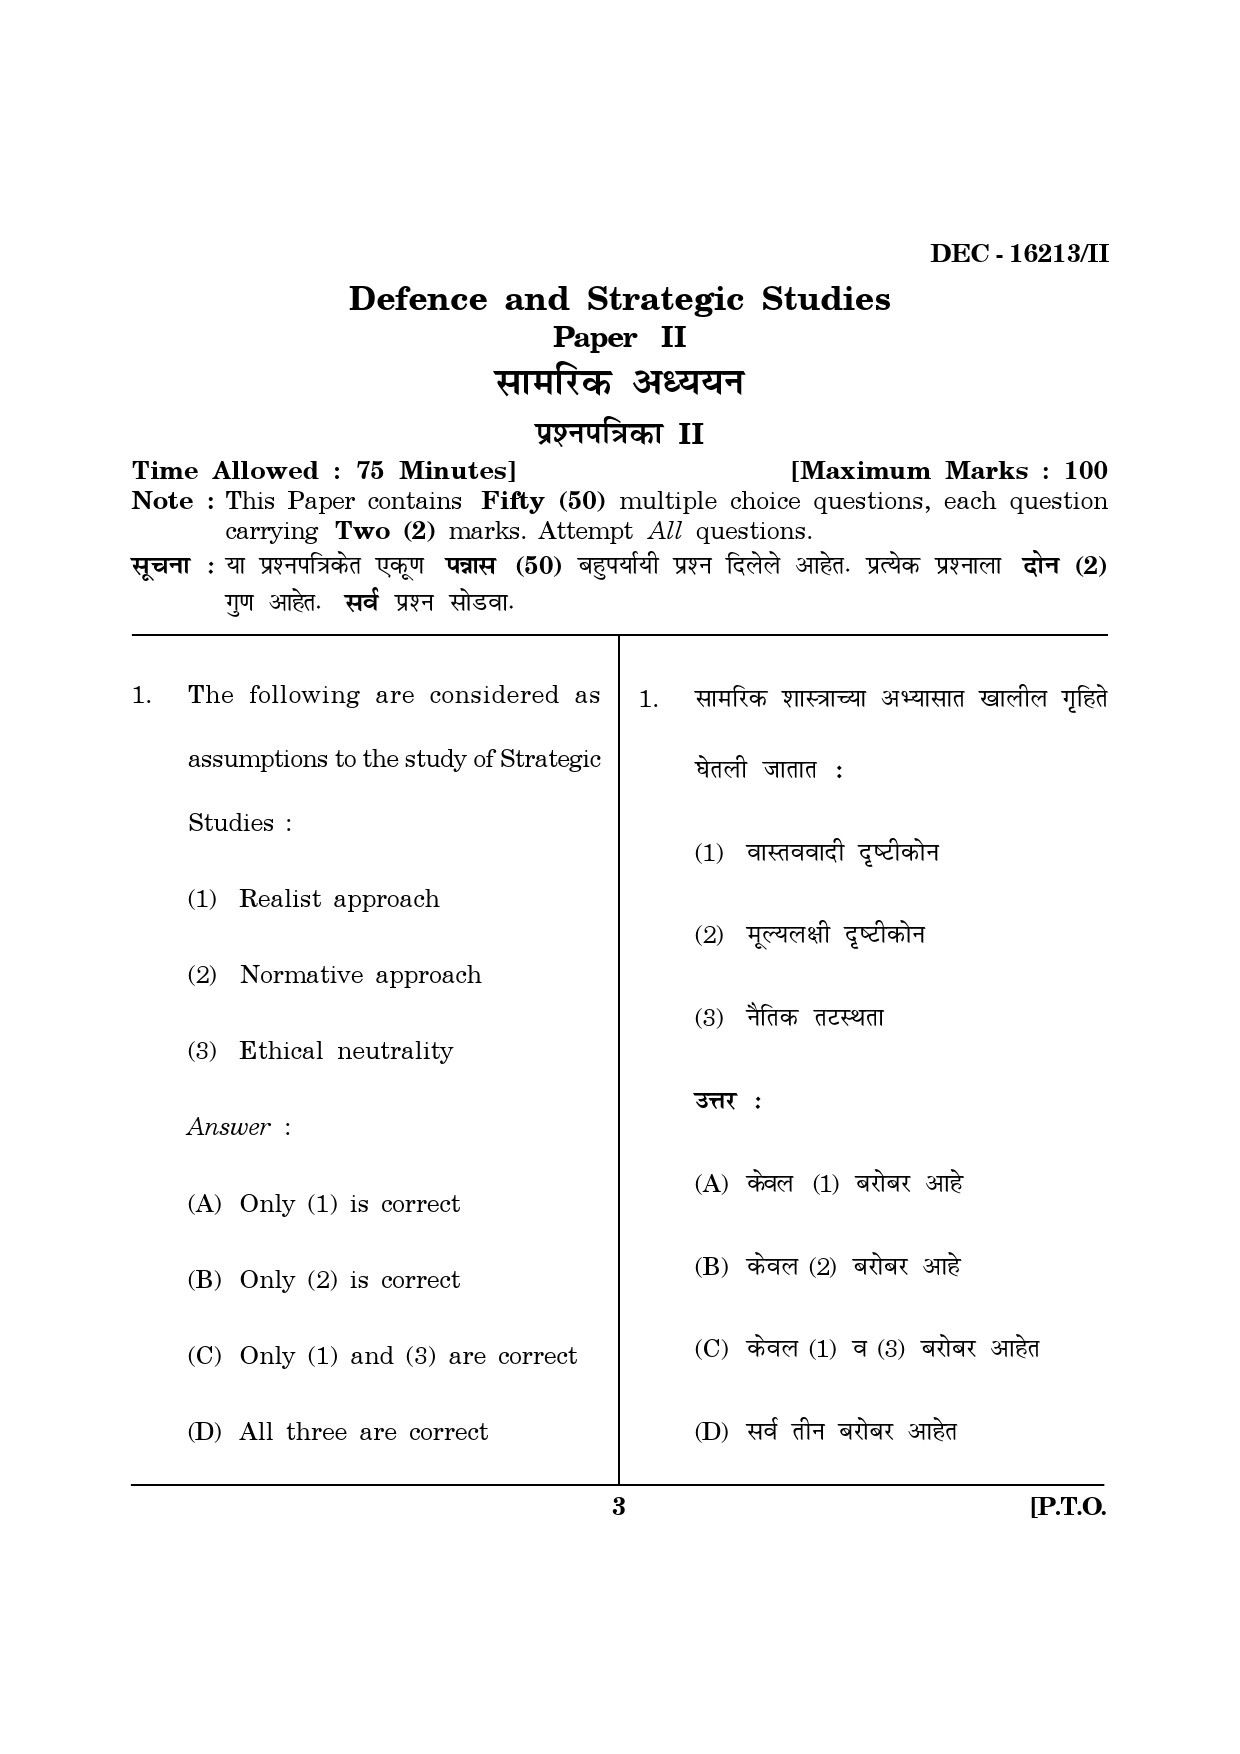 Maharashtra SET Defence and Strategic Studies Question Paper II December 2013 2